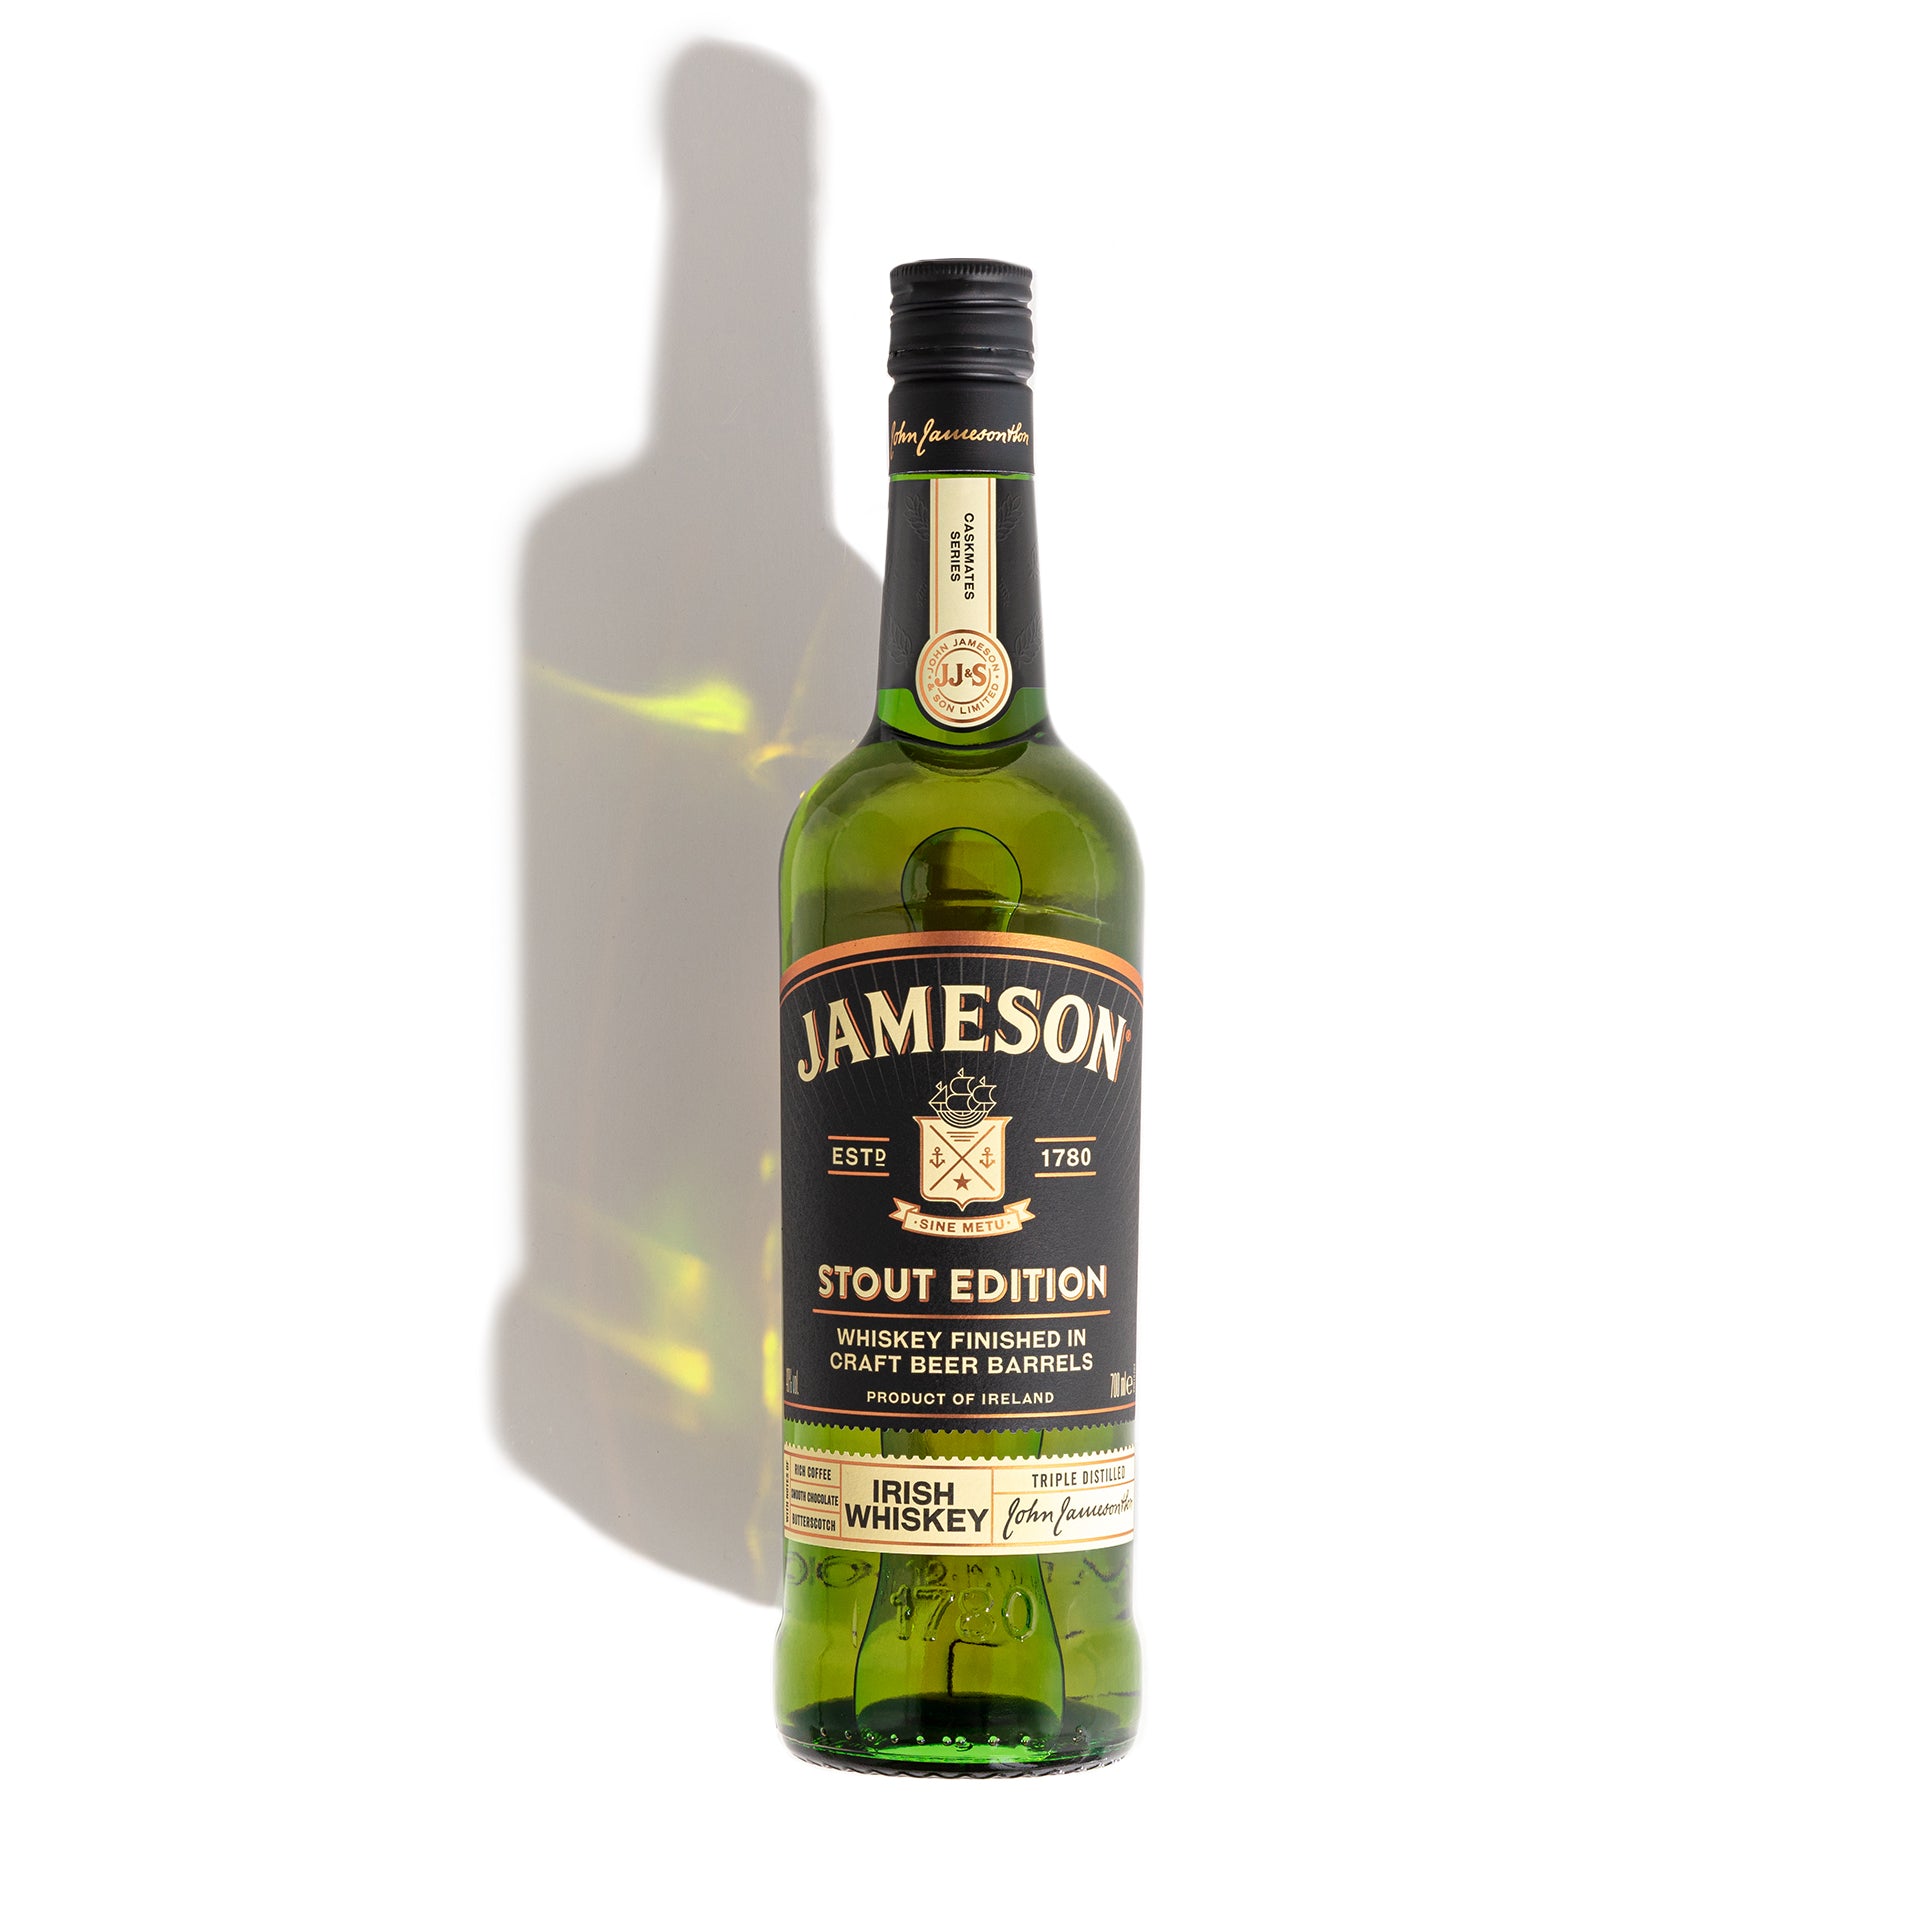 Jameson Stout Edition | Midleton Distillery Collection